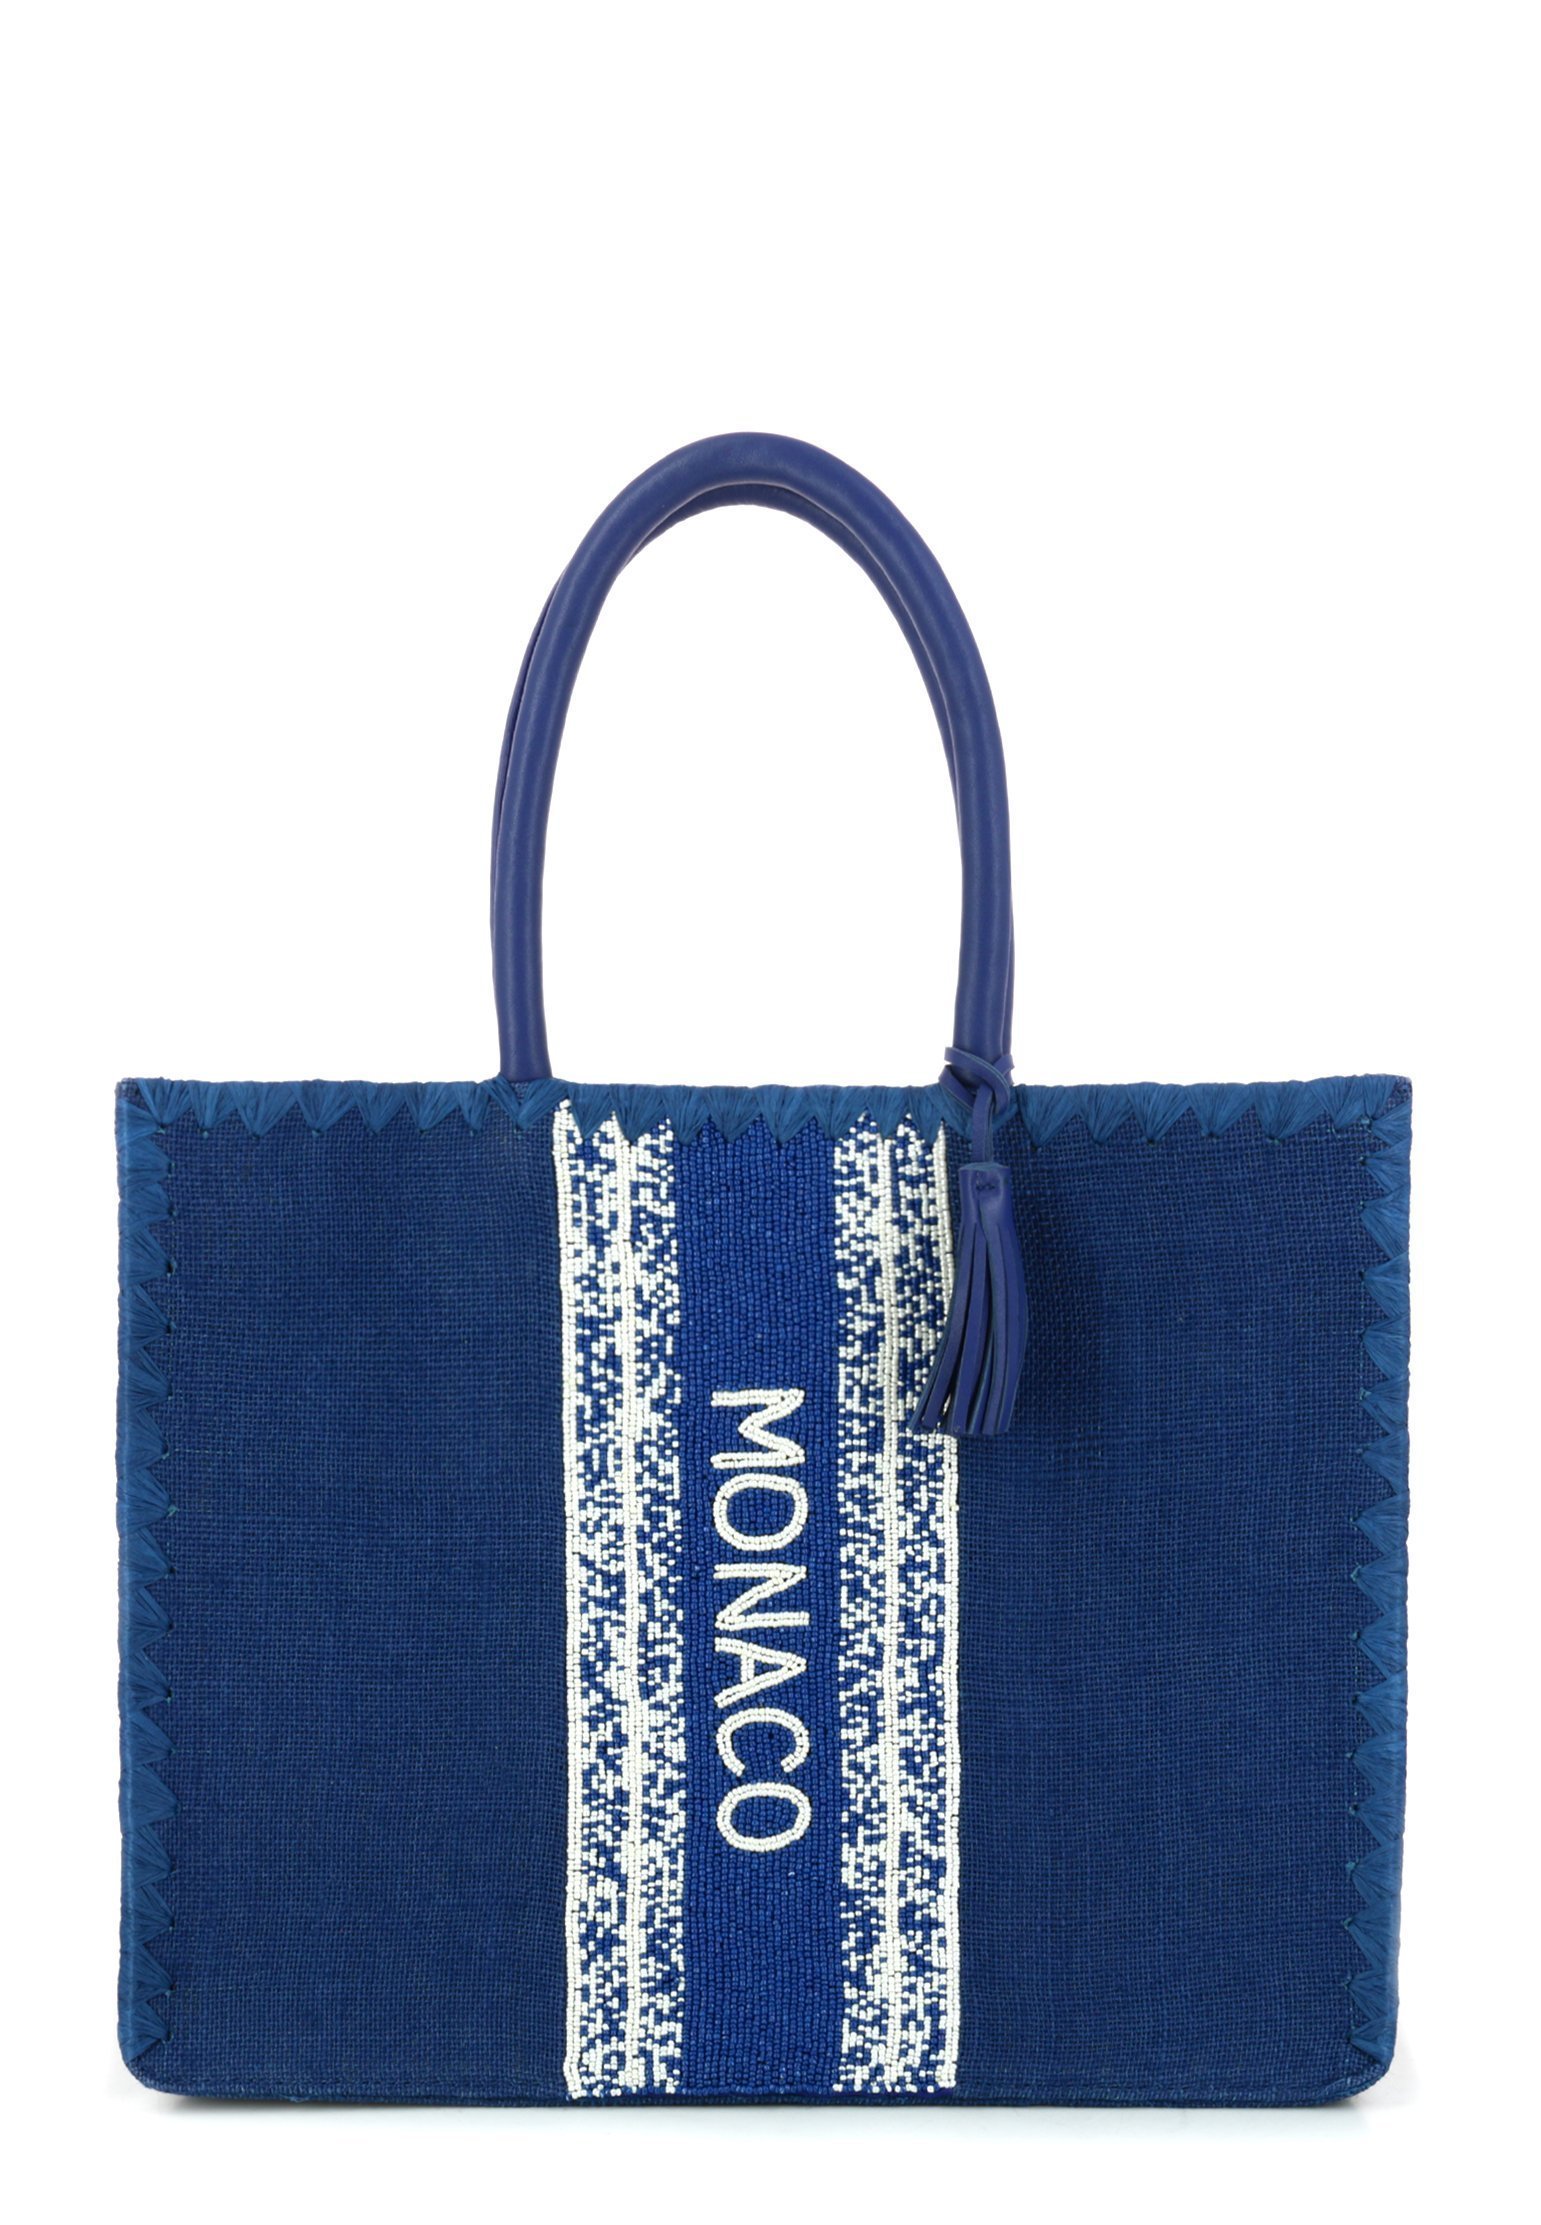 Bag DE SIENA Color: blue (Code: 2322) in online store Allure